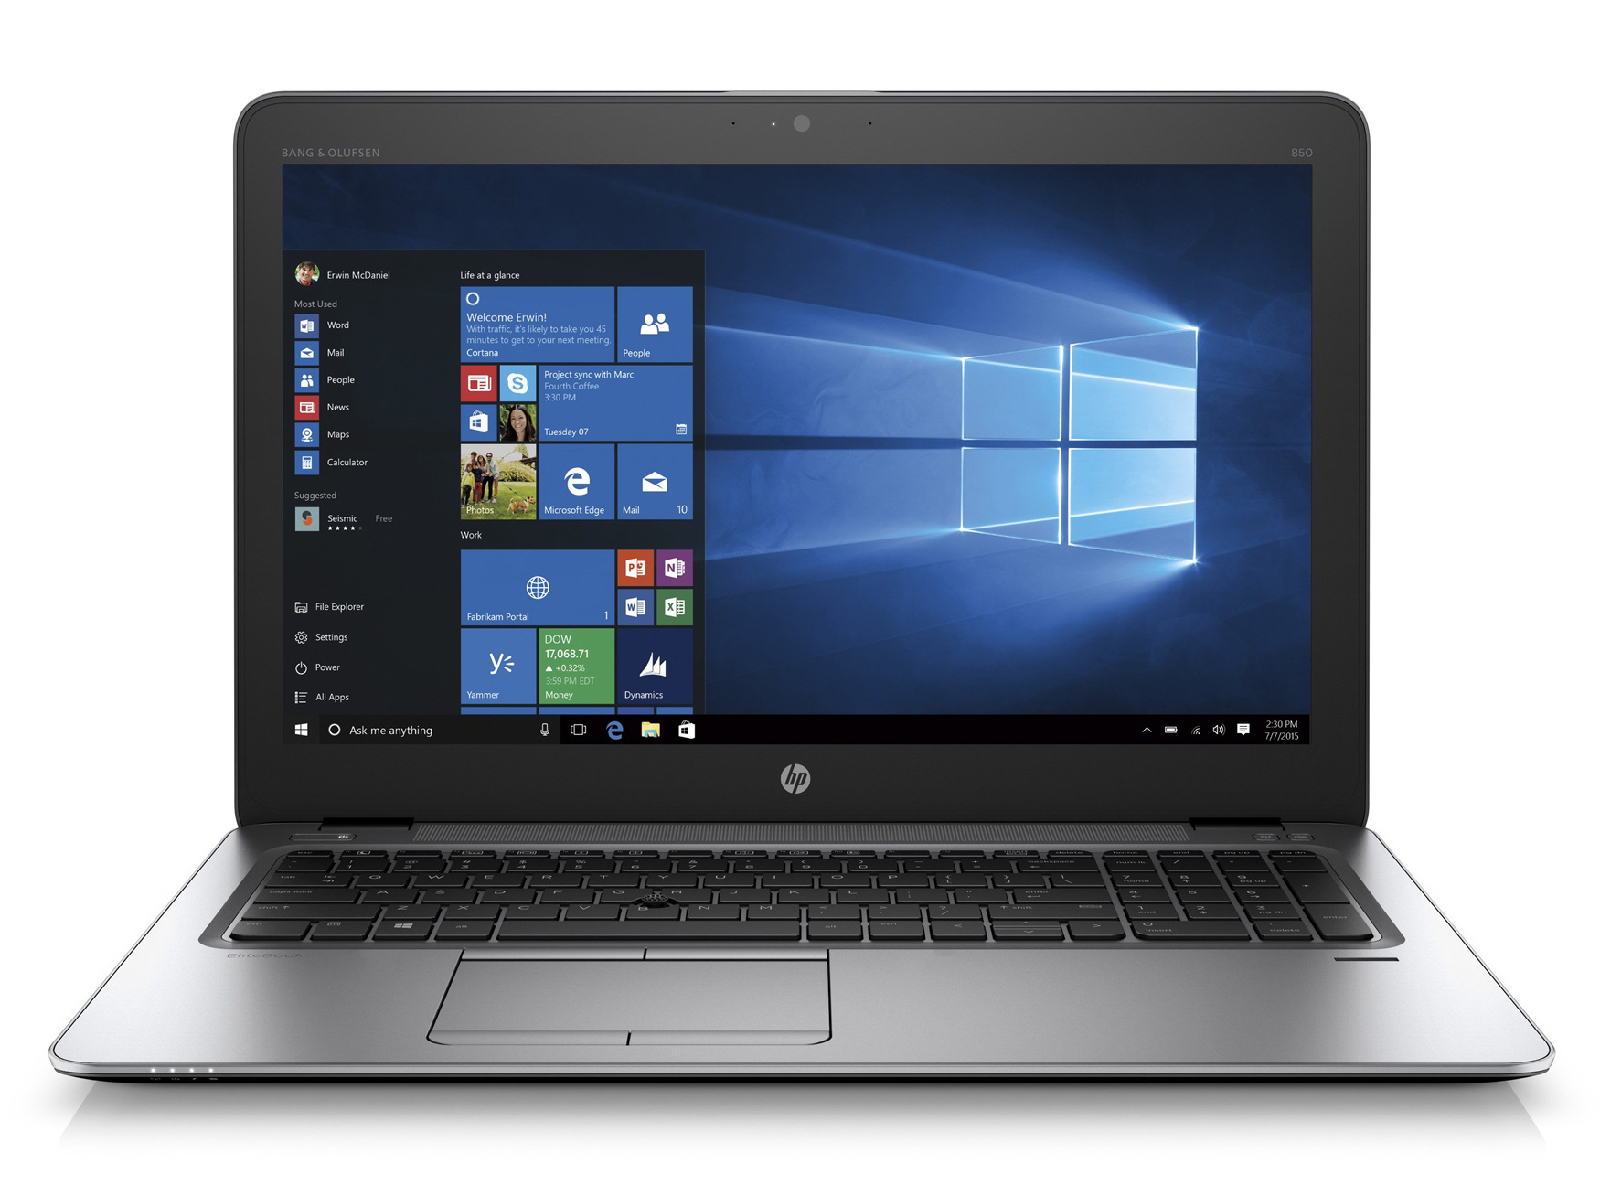 HP EliteBook 850 G3 Intel i5 6300U 2.40GHz 4GB RAM 240GB SSD 15.6" Win 10 Image 2